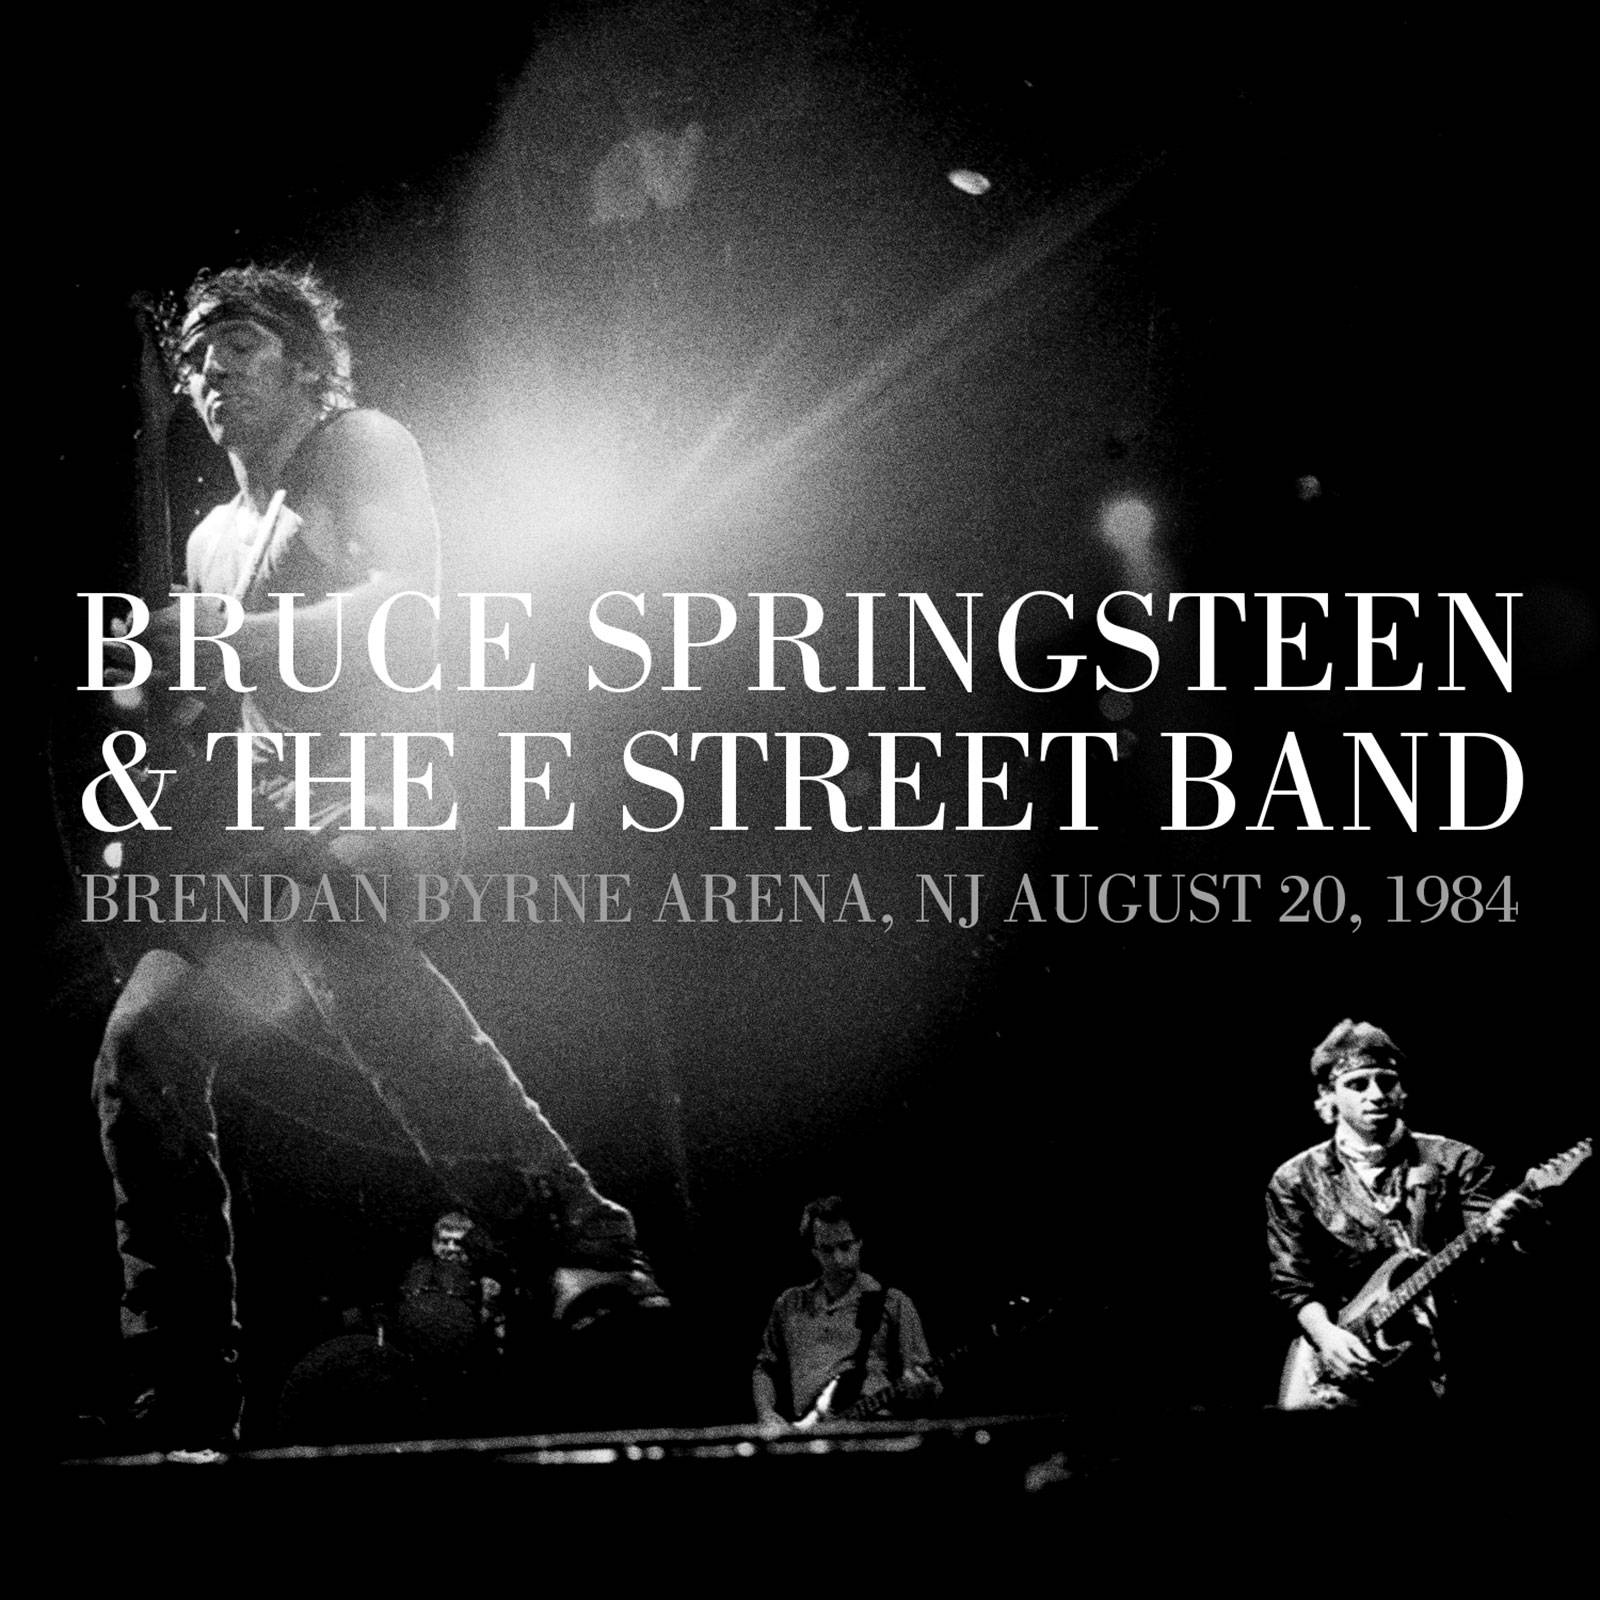 Bruce Springsteen & The E Street Band - 1984-08-20 Brendan Byrne Arena, East Rutherford, NJ (2018) [FLAC 24bit/192kHz]